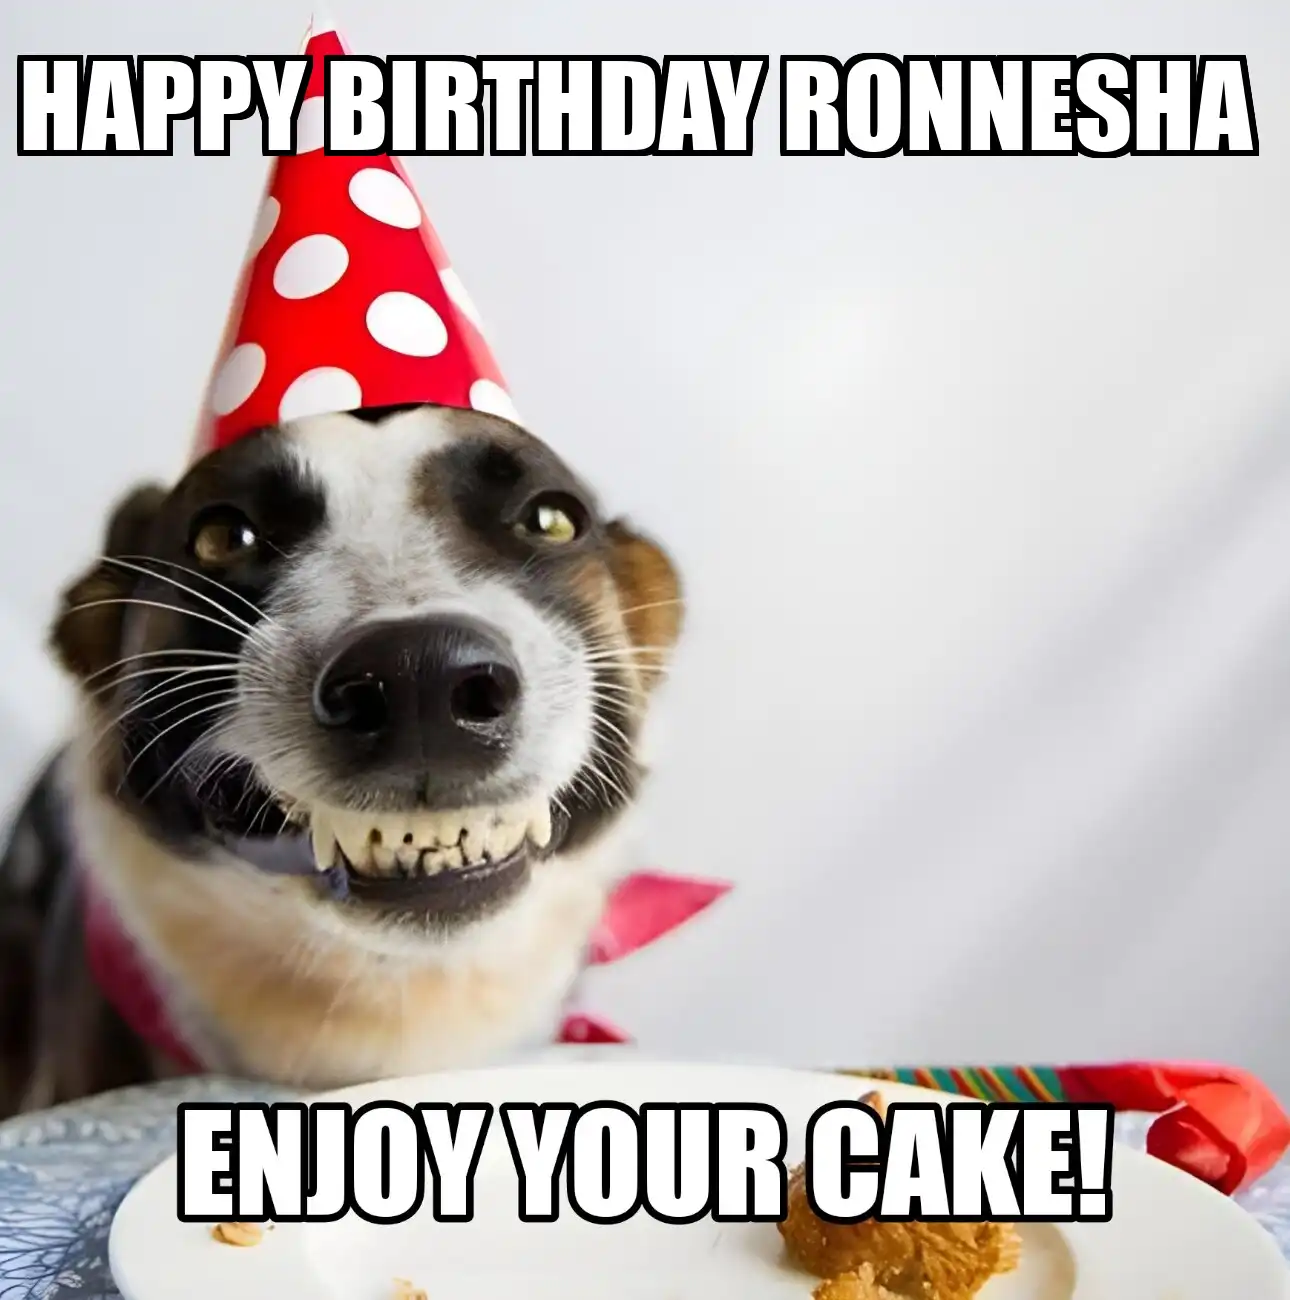 Happy Birthday Ronnesha Enjoy Your Cake Dog Meme